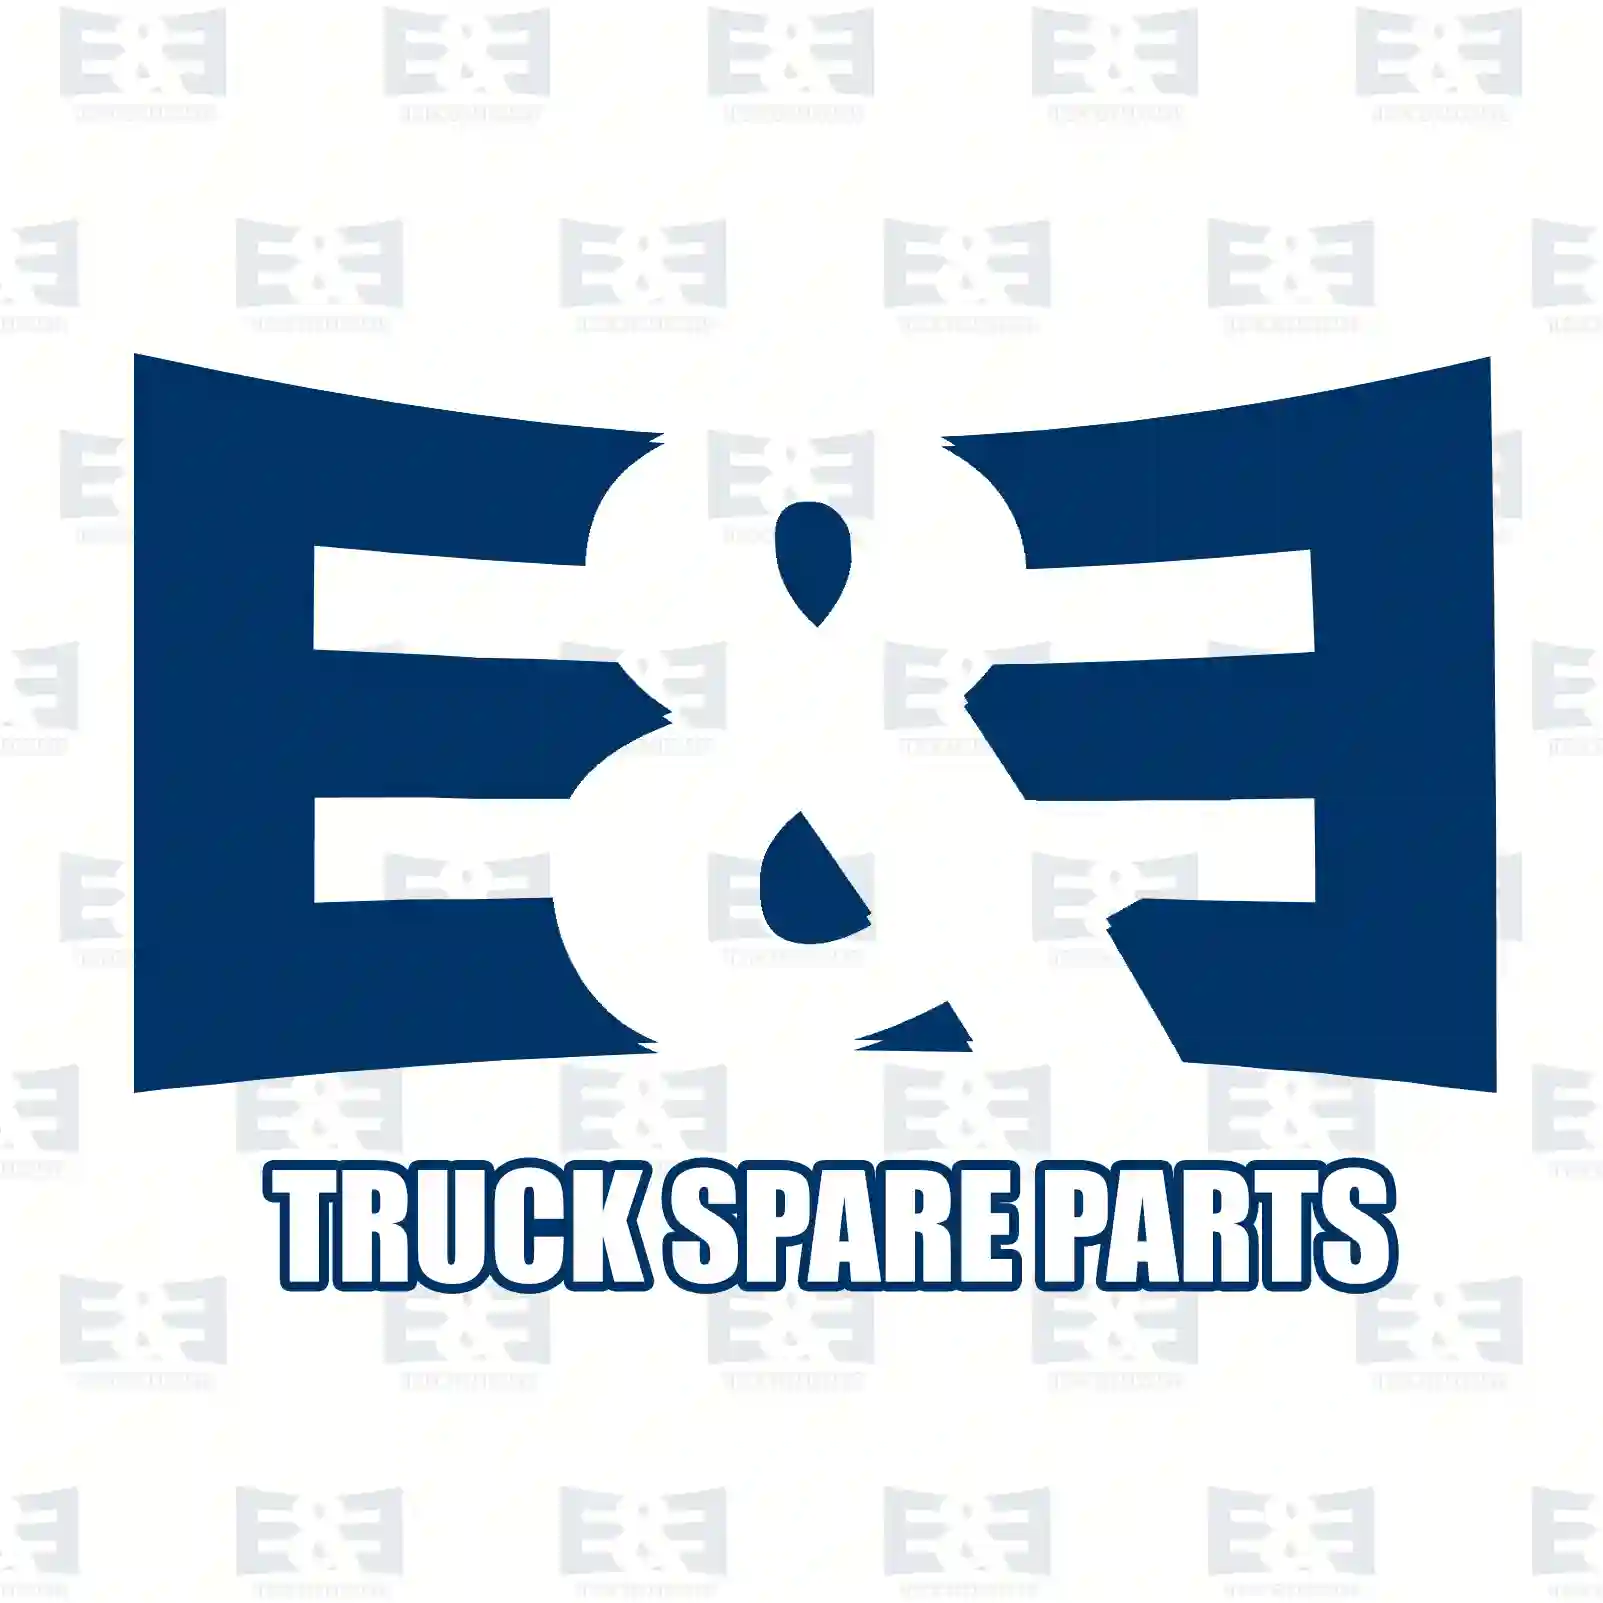 Clutch disc, 2E2289230, 5010244421, 81303010375, 81303010461, 81303010664, 81303019375, 5010244077, 5010244242, 5010244421, 5010452572, ZG30296-0008 ||  2E2289230 E&E Truck Spare Parts | Truck Spare Parts, Auotomotive Spare Parts Clutch disc, 2E2289230, 5010244421, 81303010375, 81303010461, 81303010664, 81303019375, 5010244077, 5010244242, 5010244421, 5010452572, ZG30296-0008 ||  2E2289230 E&E Truck Spare Parts | Truck Spare Parts, Auotomotive Spare Parts